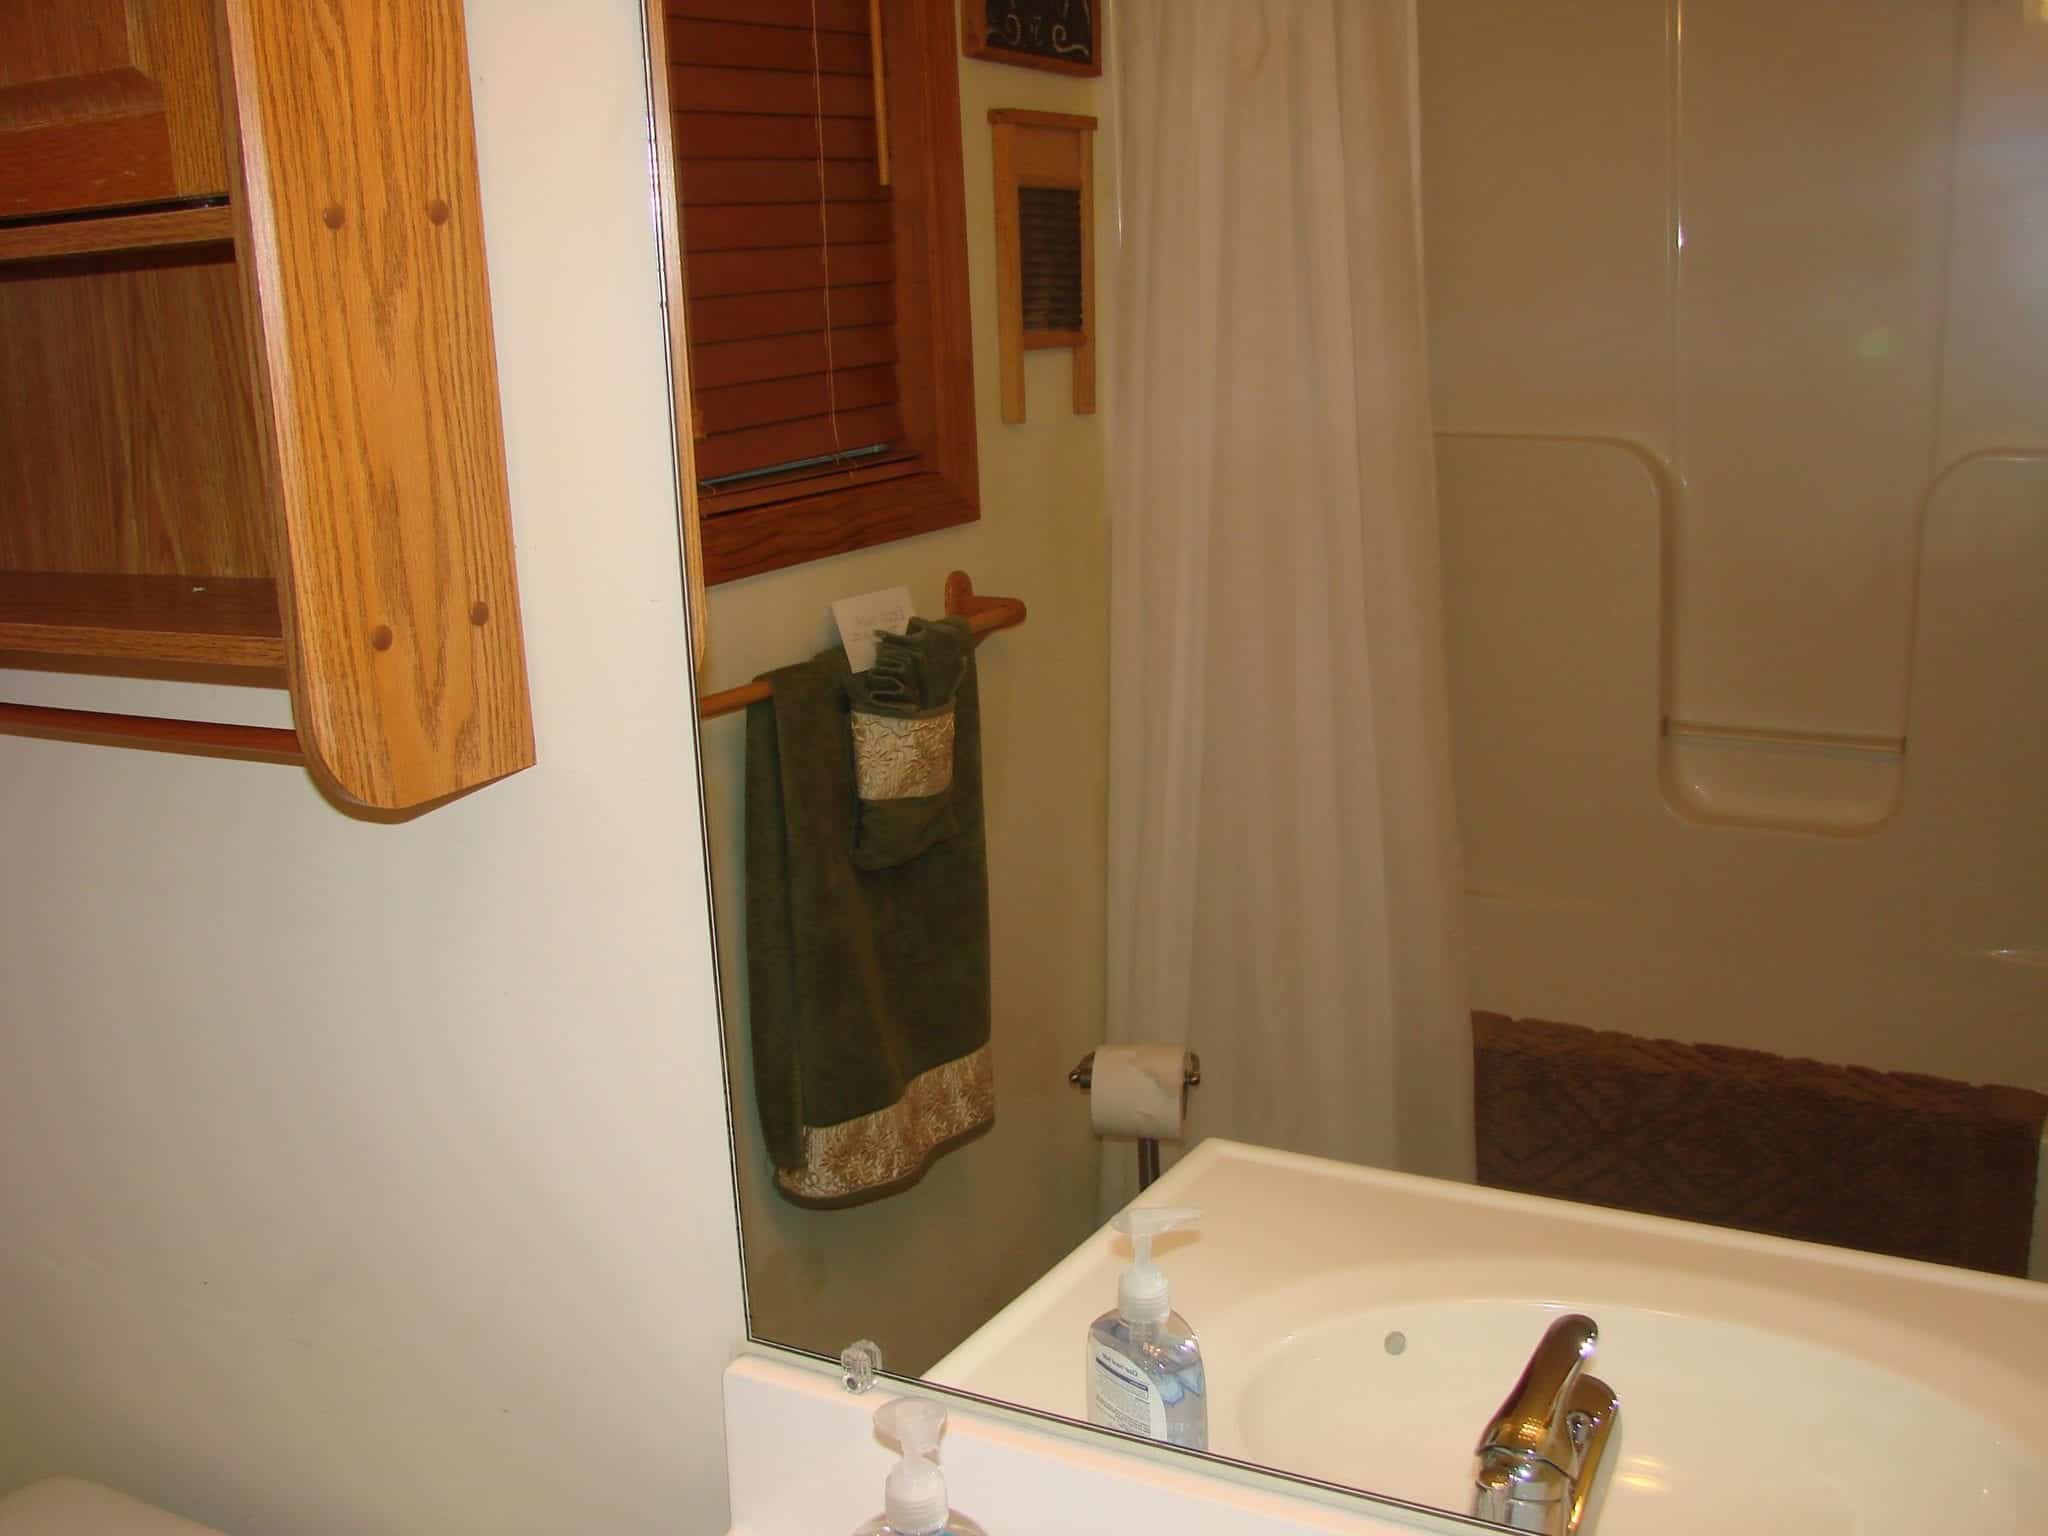 The bathroom in a cabin in Murphy NC.